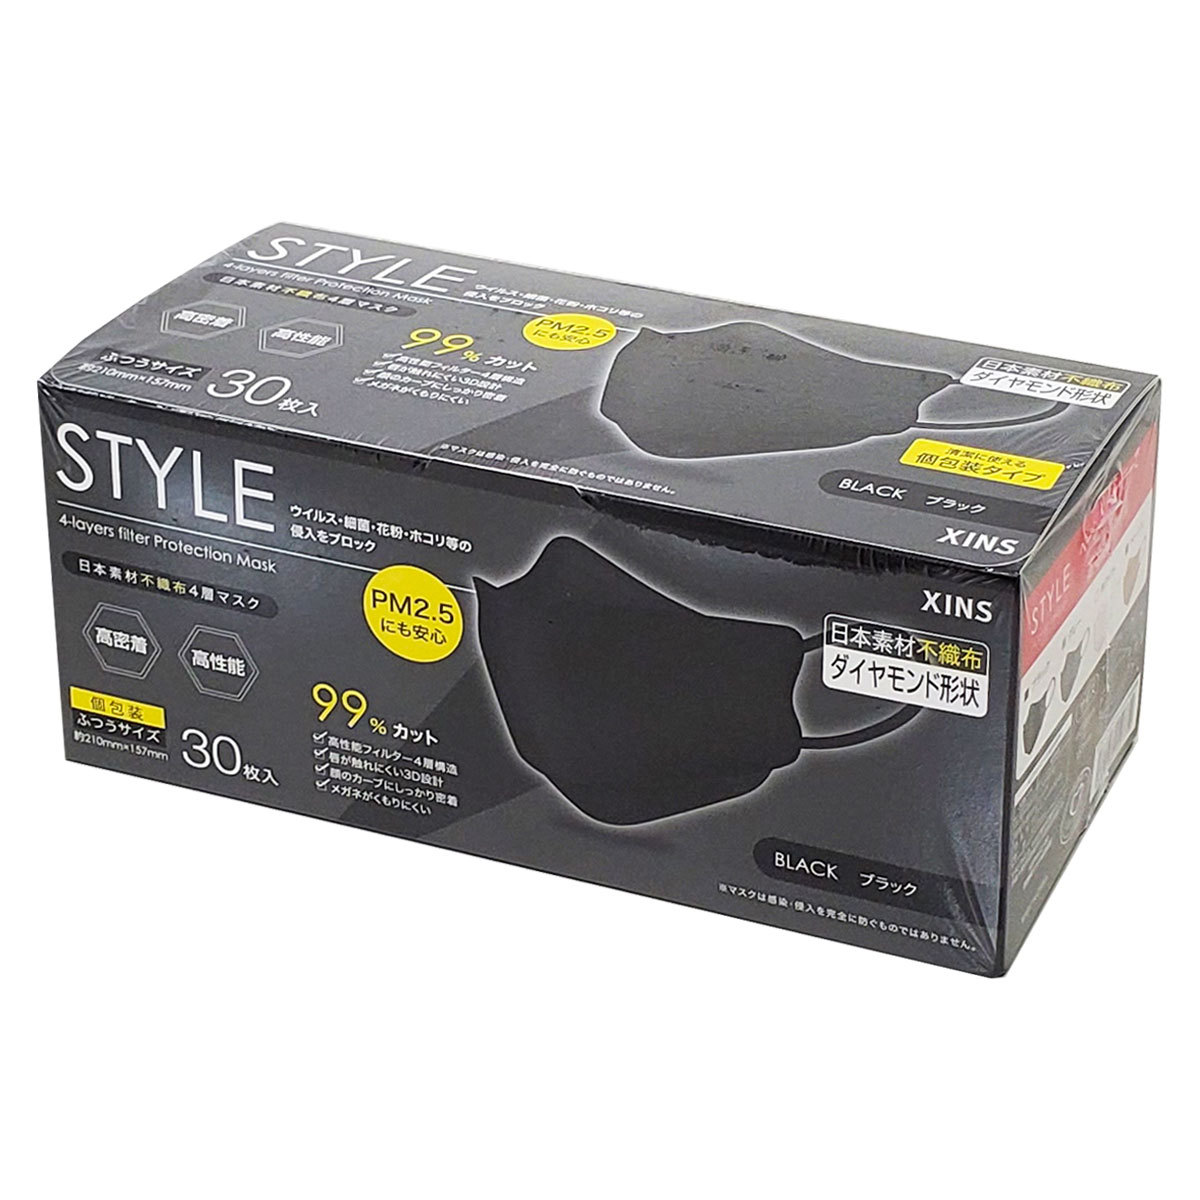 XINS XINS STYLEマスク ふつうサイズ ブラック 個別包装 30枚入 × 1個 STYLEマスク 衛生用品マスクの商品画像